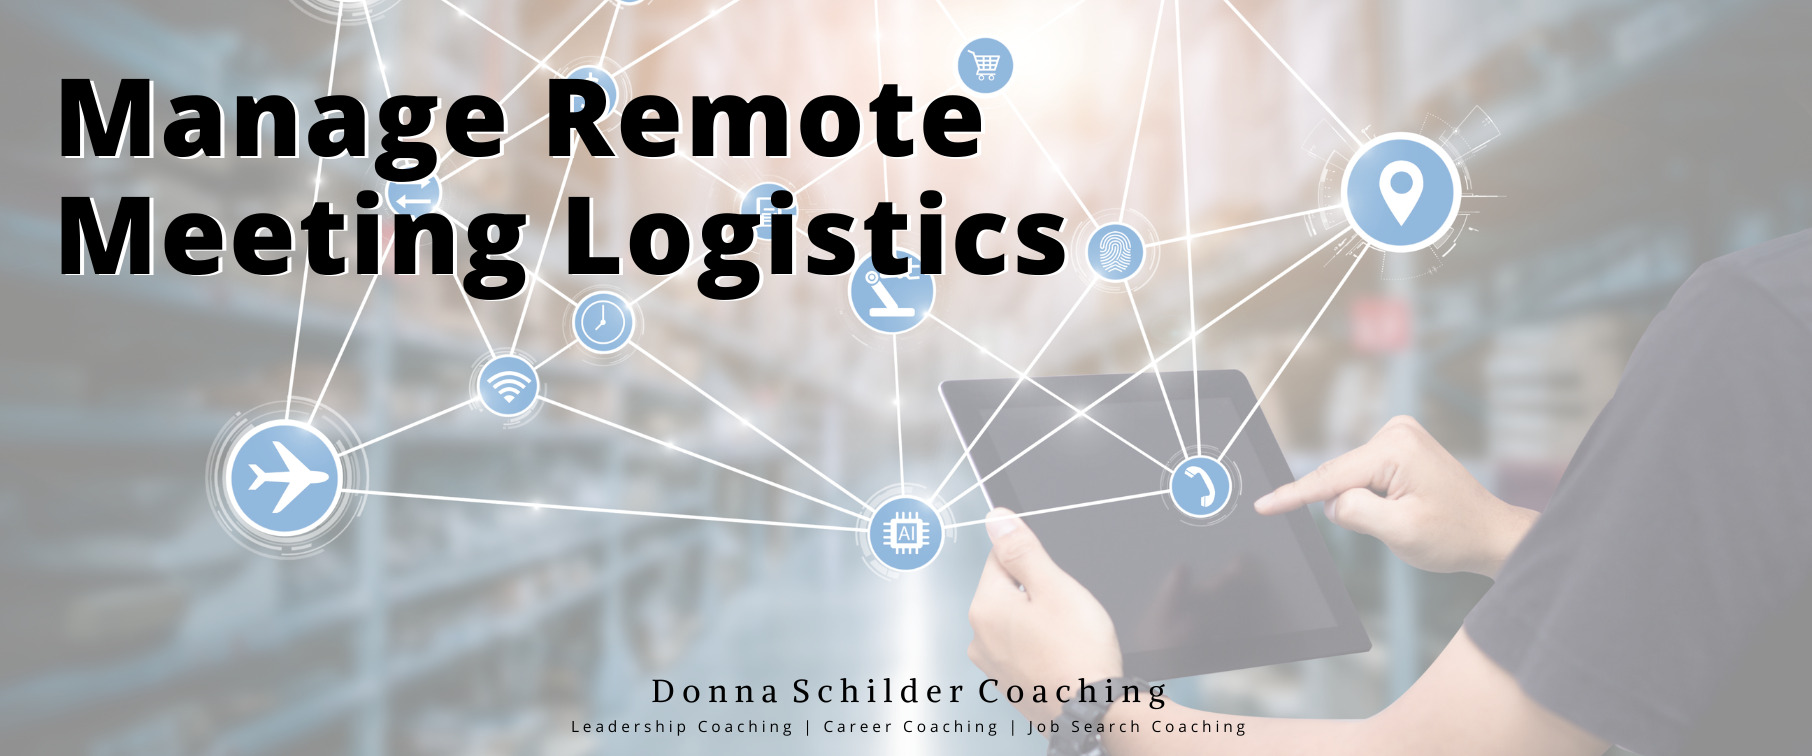 Manage Remote Meeting Logistics